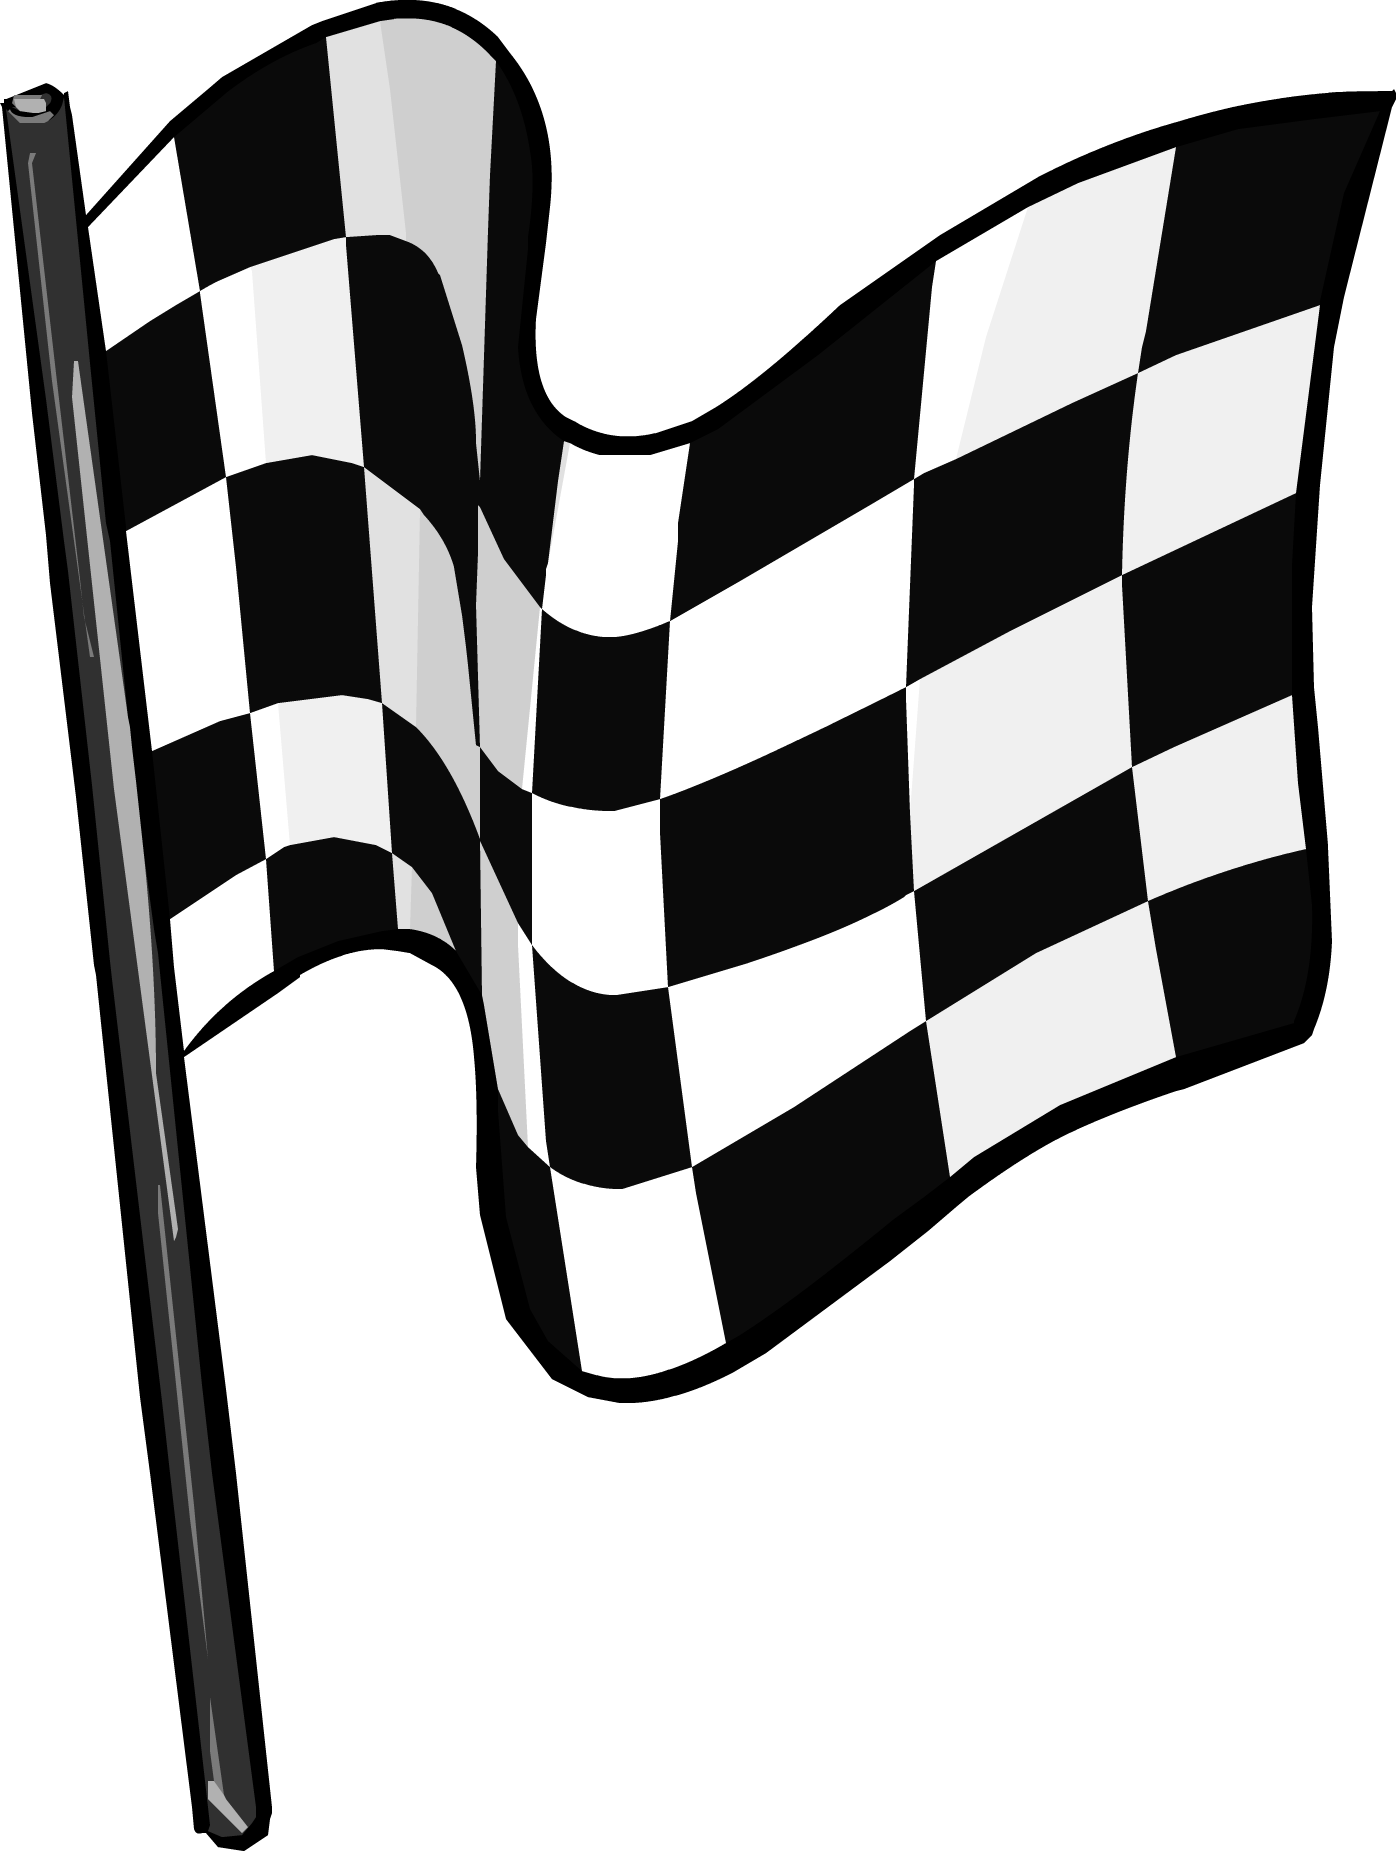 Checkered Flag - Club Penguin Wiki - The free, editable ...